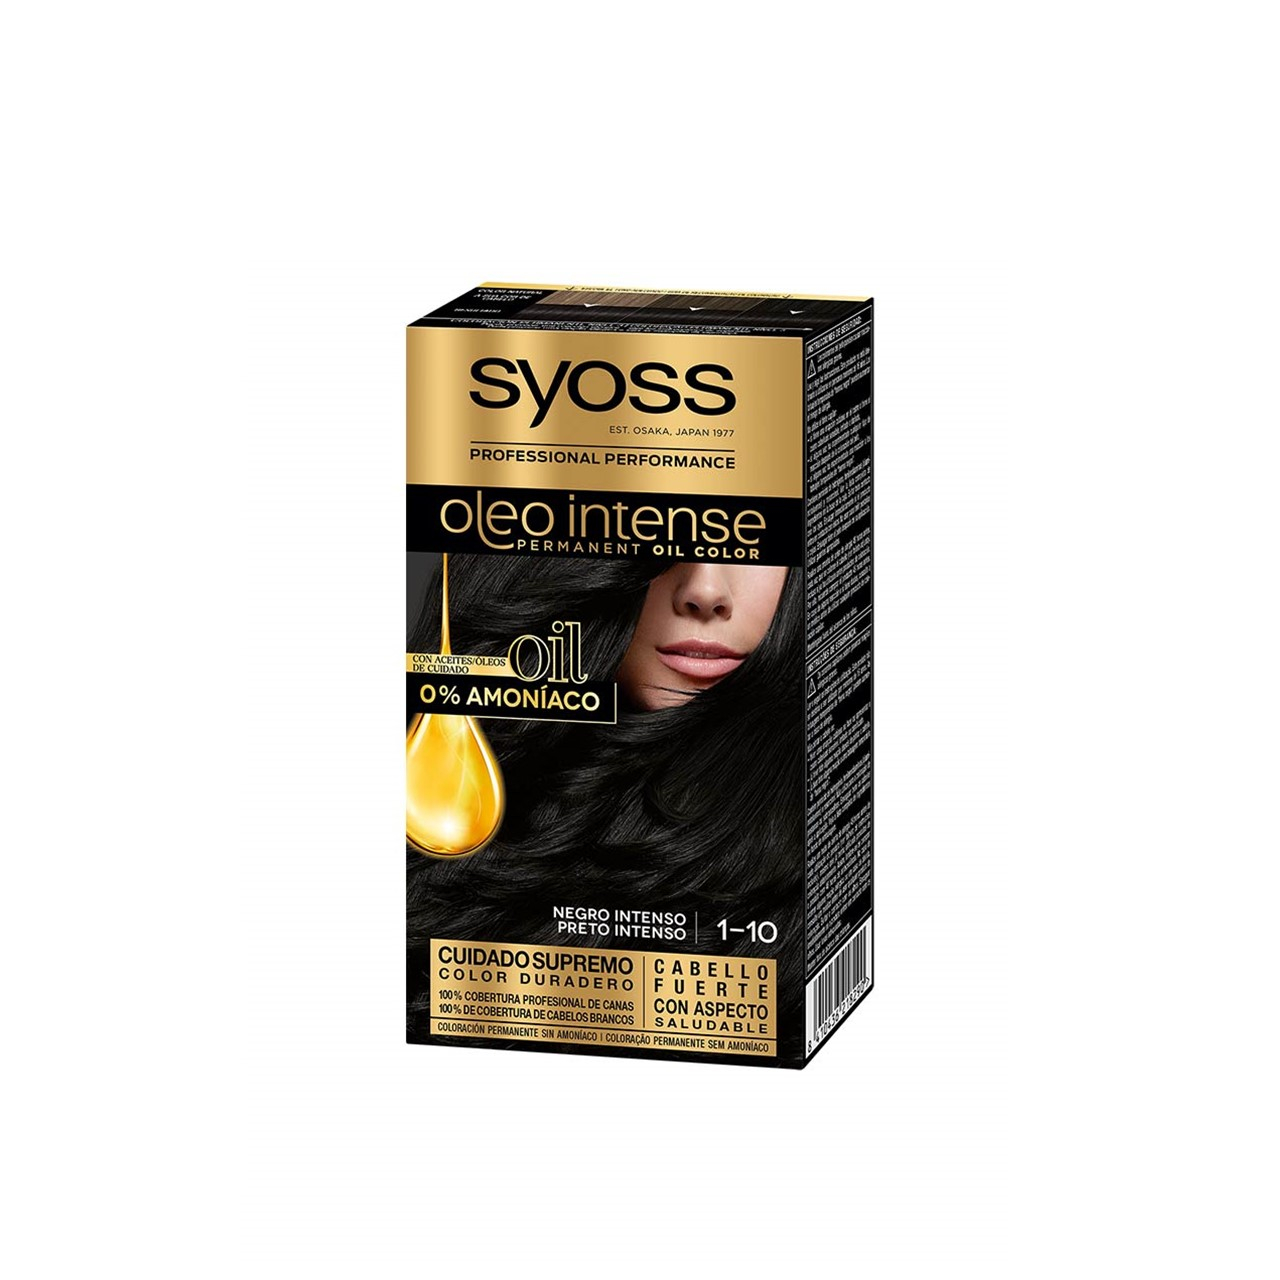 Syoss Oleo Intense Permanent Oil Color 1-10 Intense Black Permanent Hair Dye